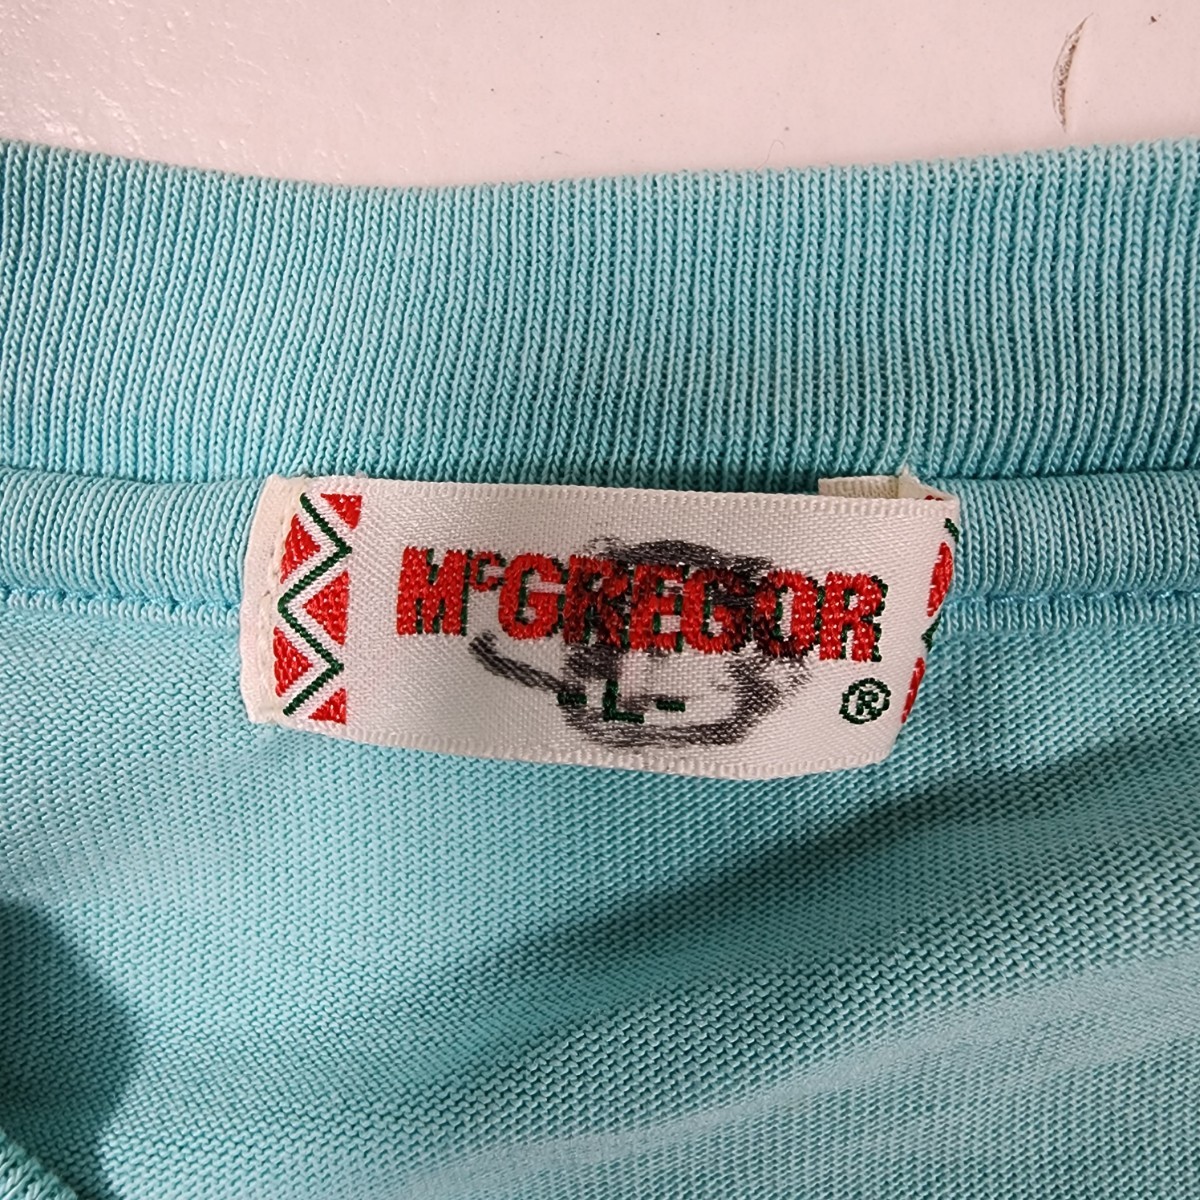 Y3 McGREGOR(マックレガー) メンズ クルーネック Tシャツ アイスグリーン 青 緑 半袖 L ロゴプリント 定番 